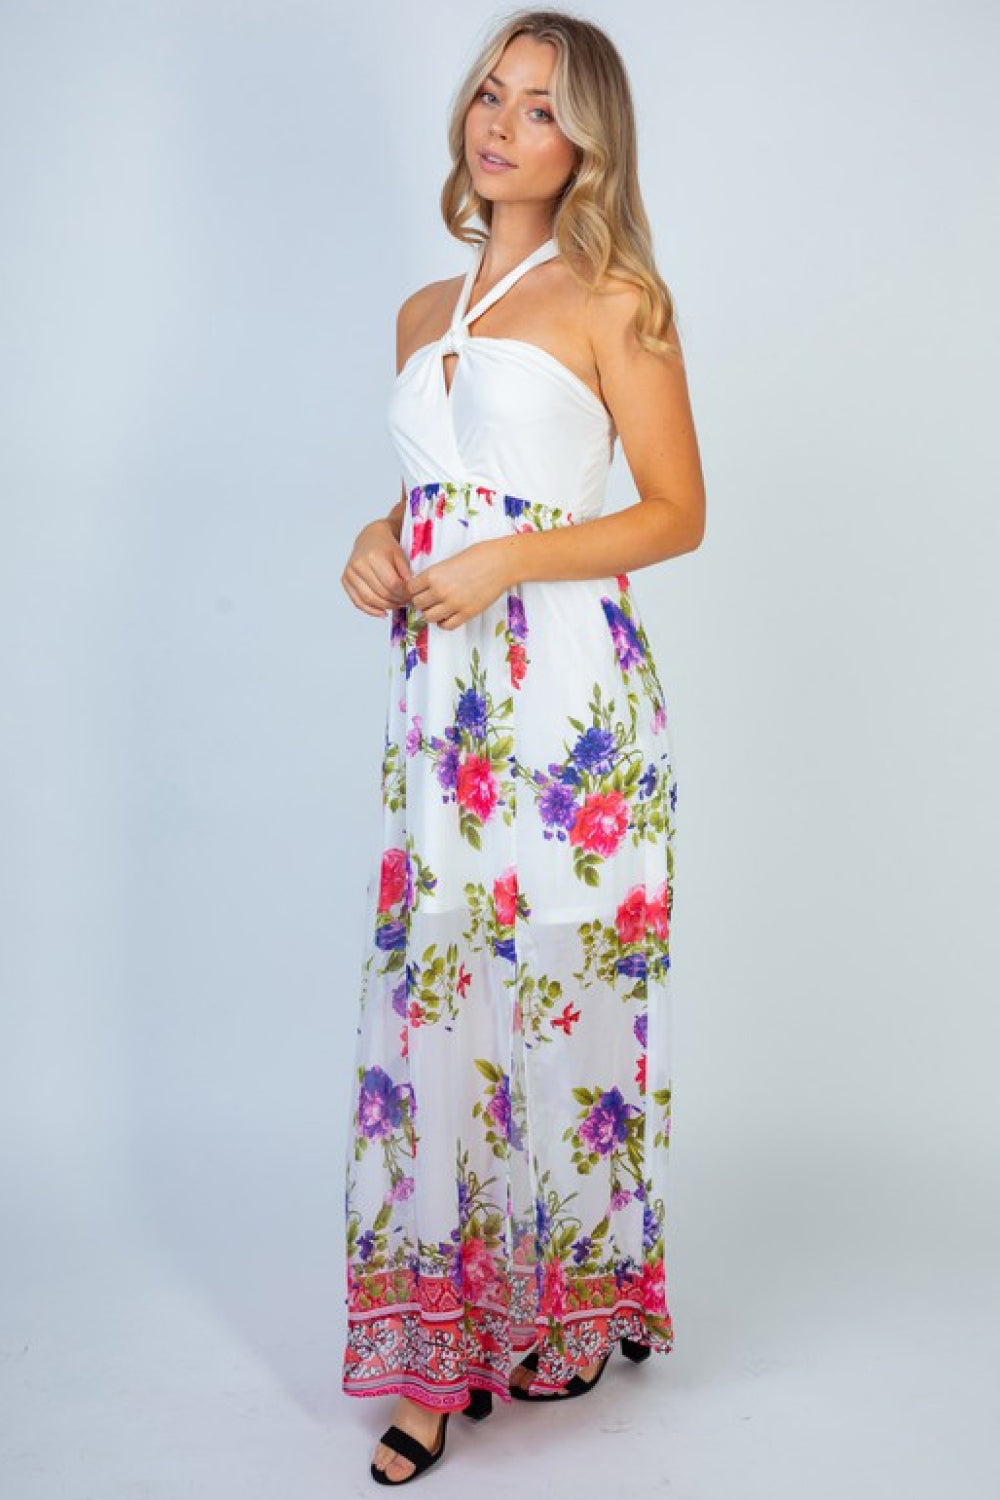 Floral Keyhole Halter Dress Colorful Sheer Mini Mock Maxi (Plus Size Available)